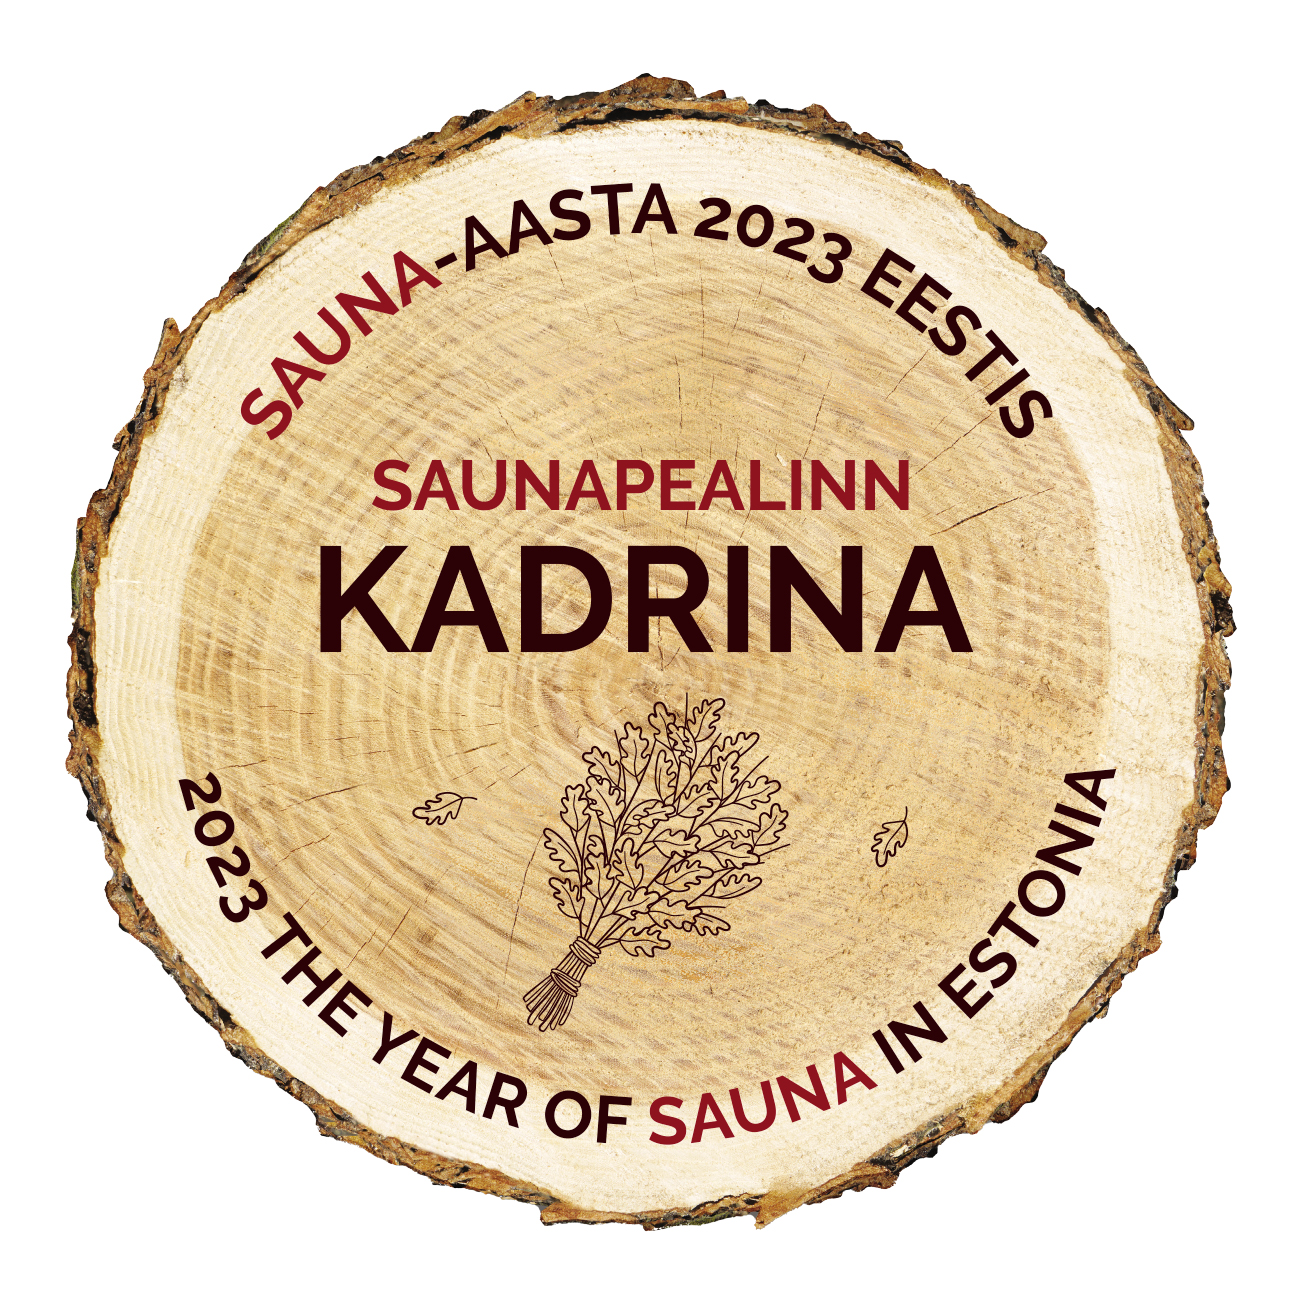 Village sauna in Kadrina, the sauna capital of Estonia